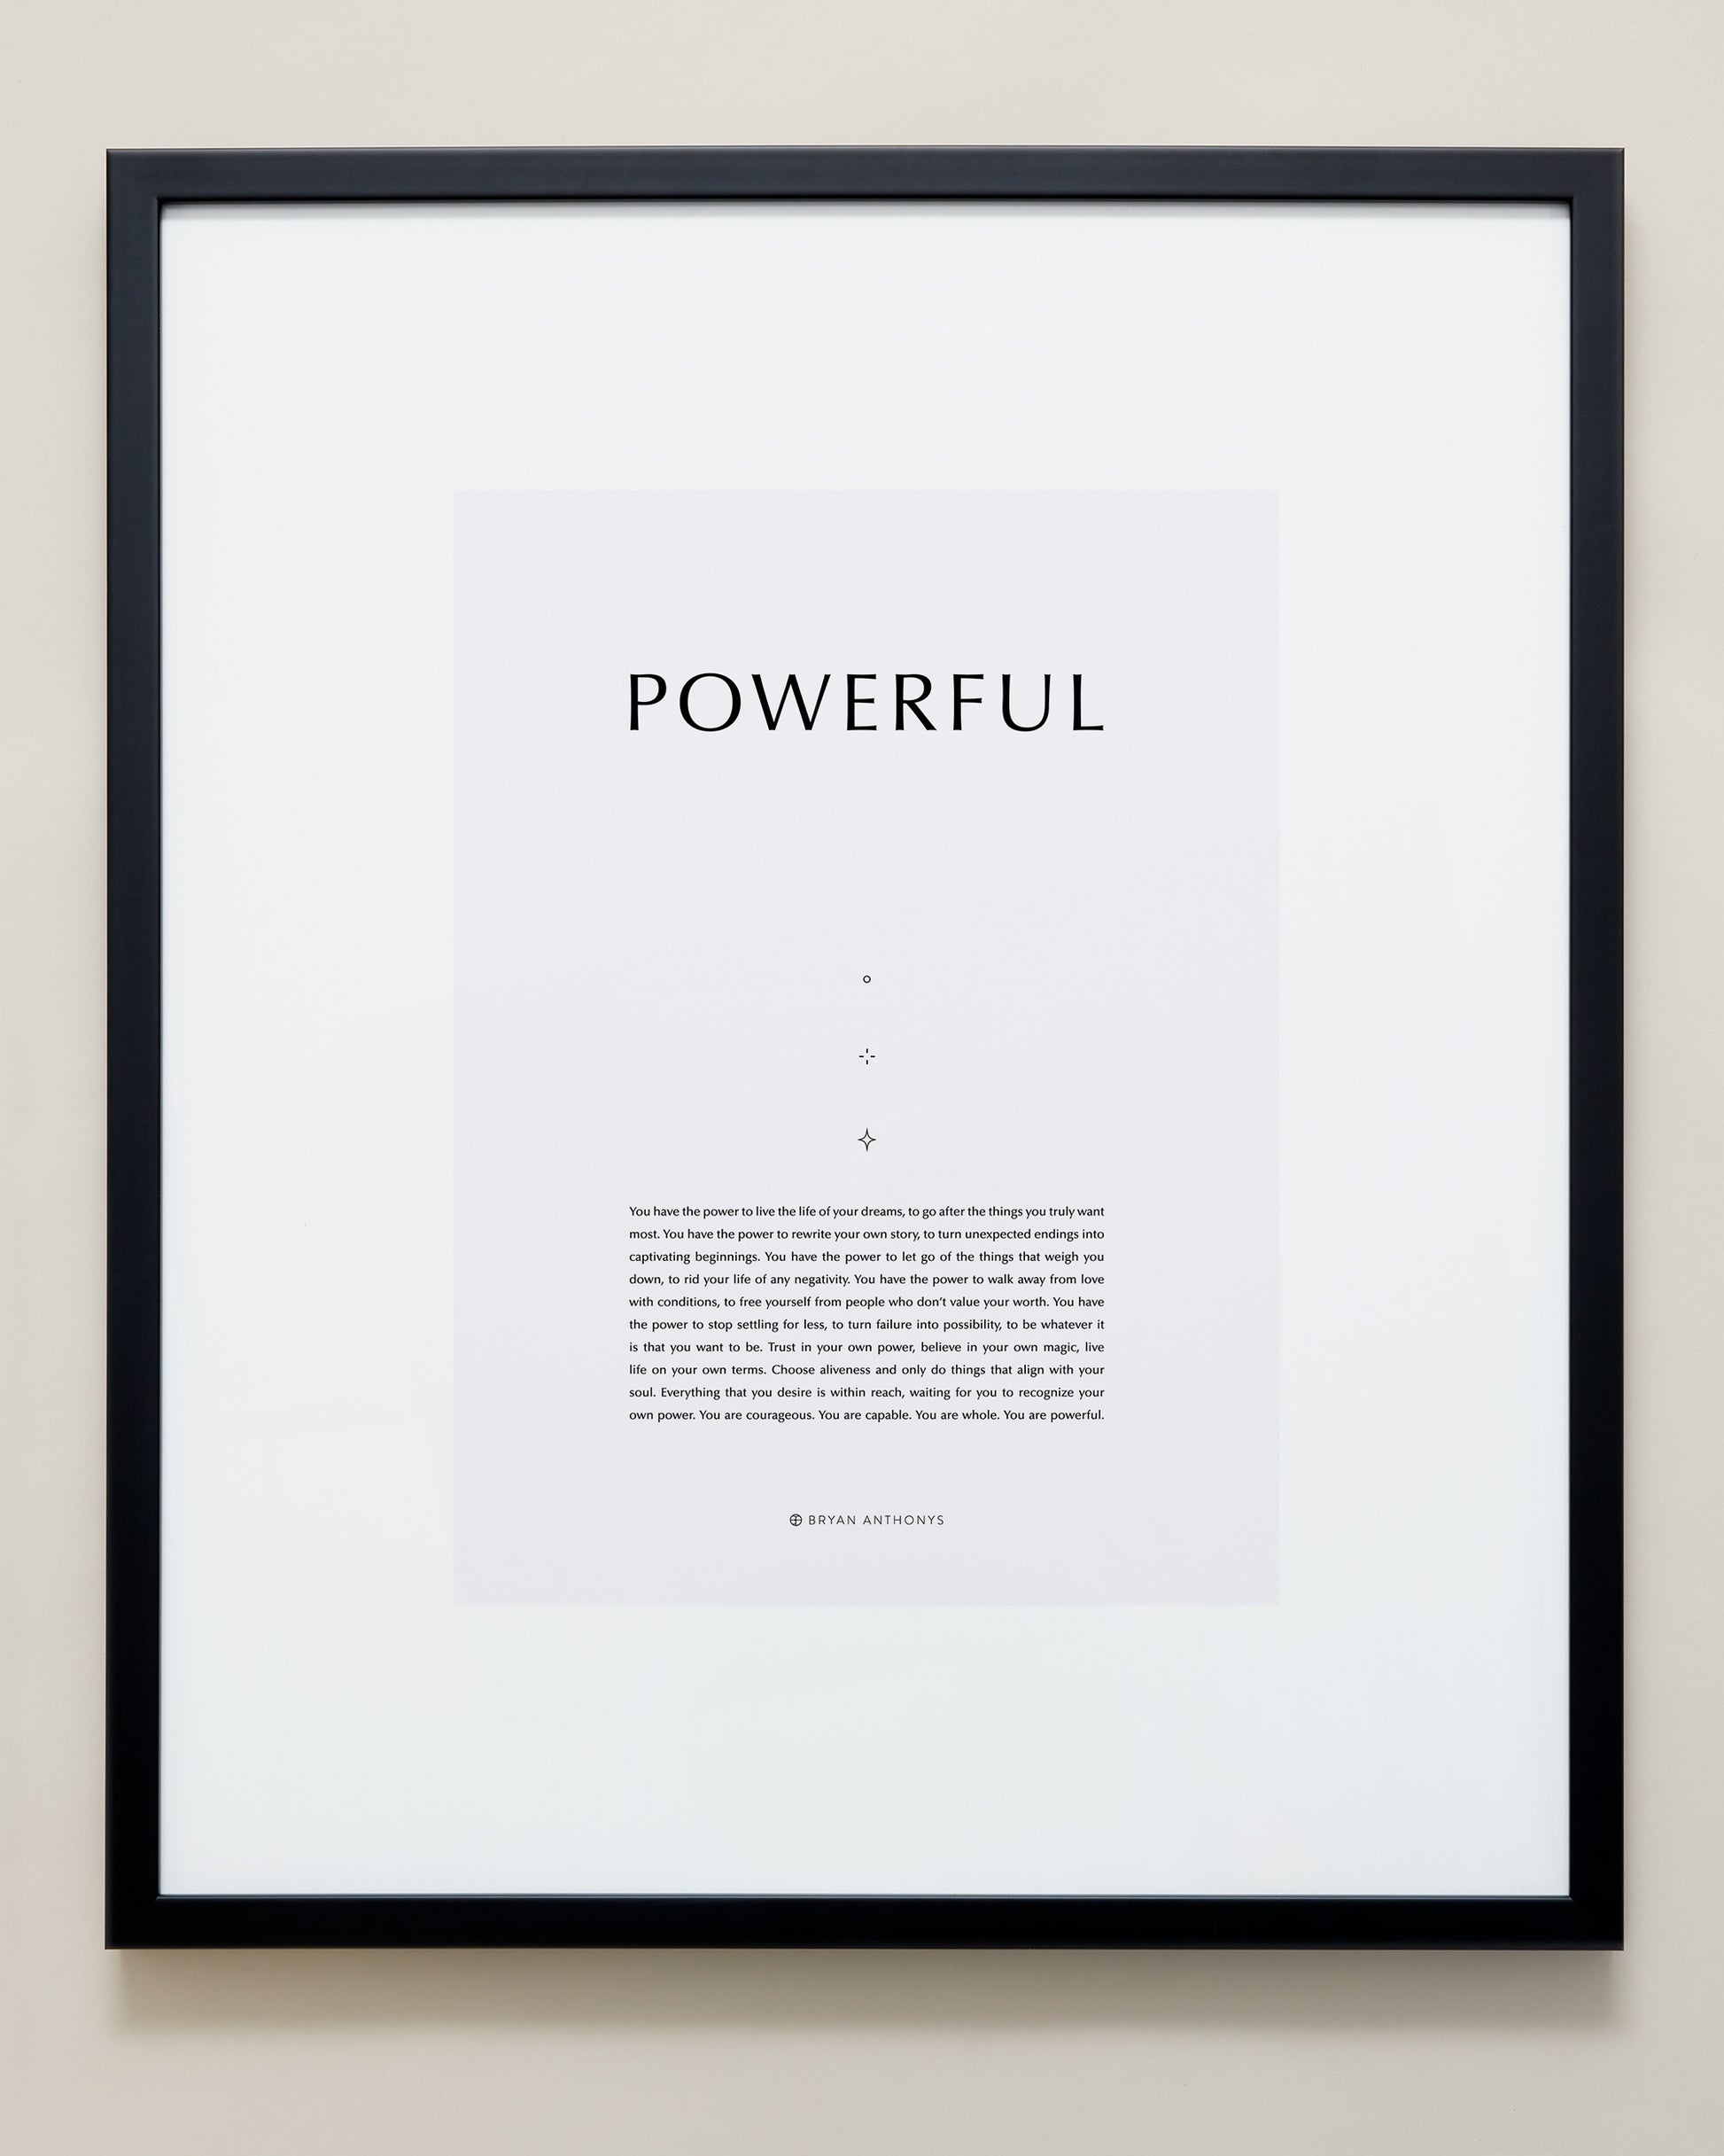 Bryan Anthonys Home Decor Purposeful Prints Powerful Iconic Framed Print Gray Art with Black Frame 20x24